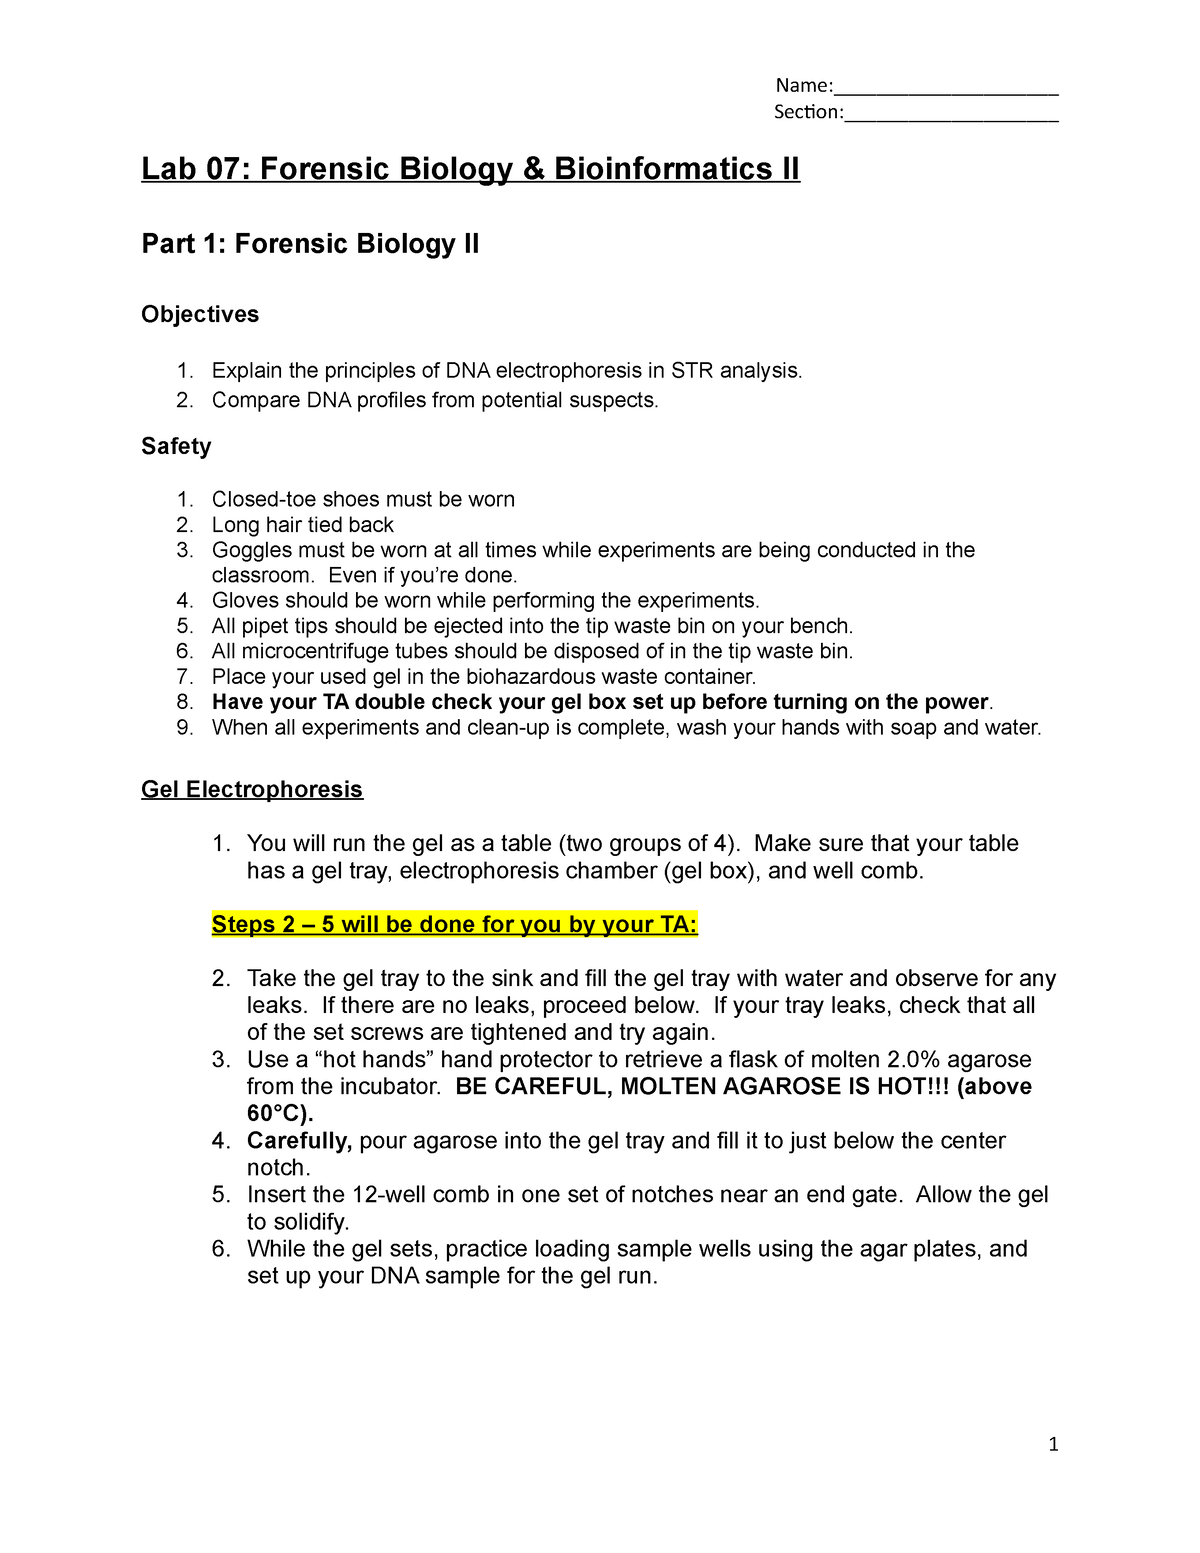 Forensic Biology Bioinformatics Iilab Protocolanddatasheet F22 1 Section 